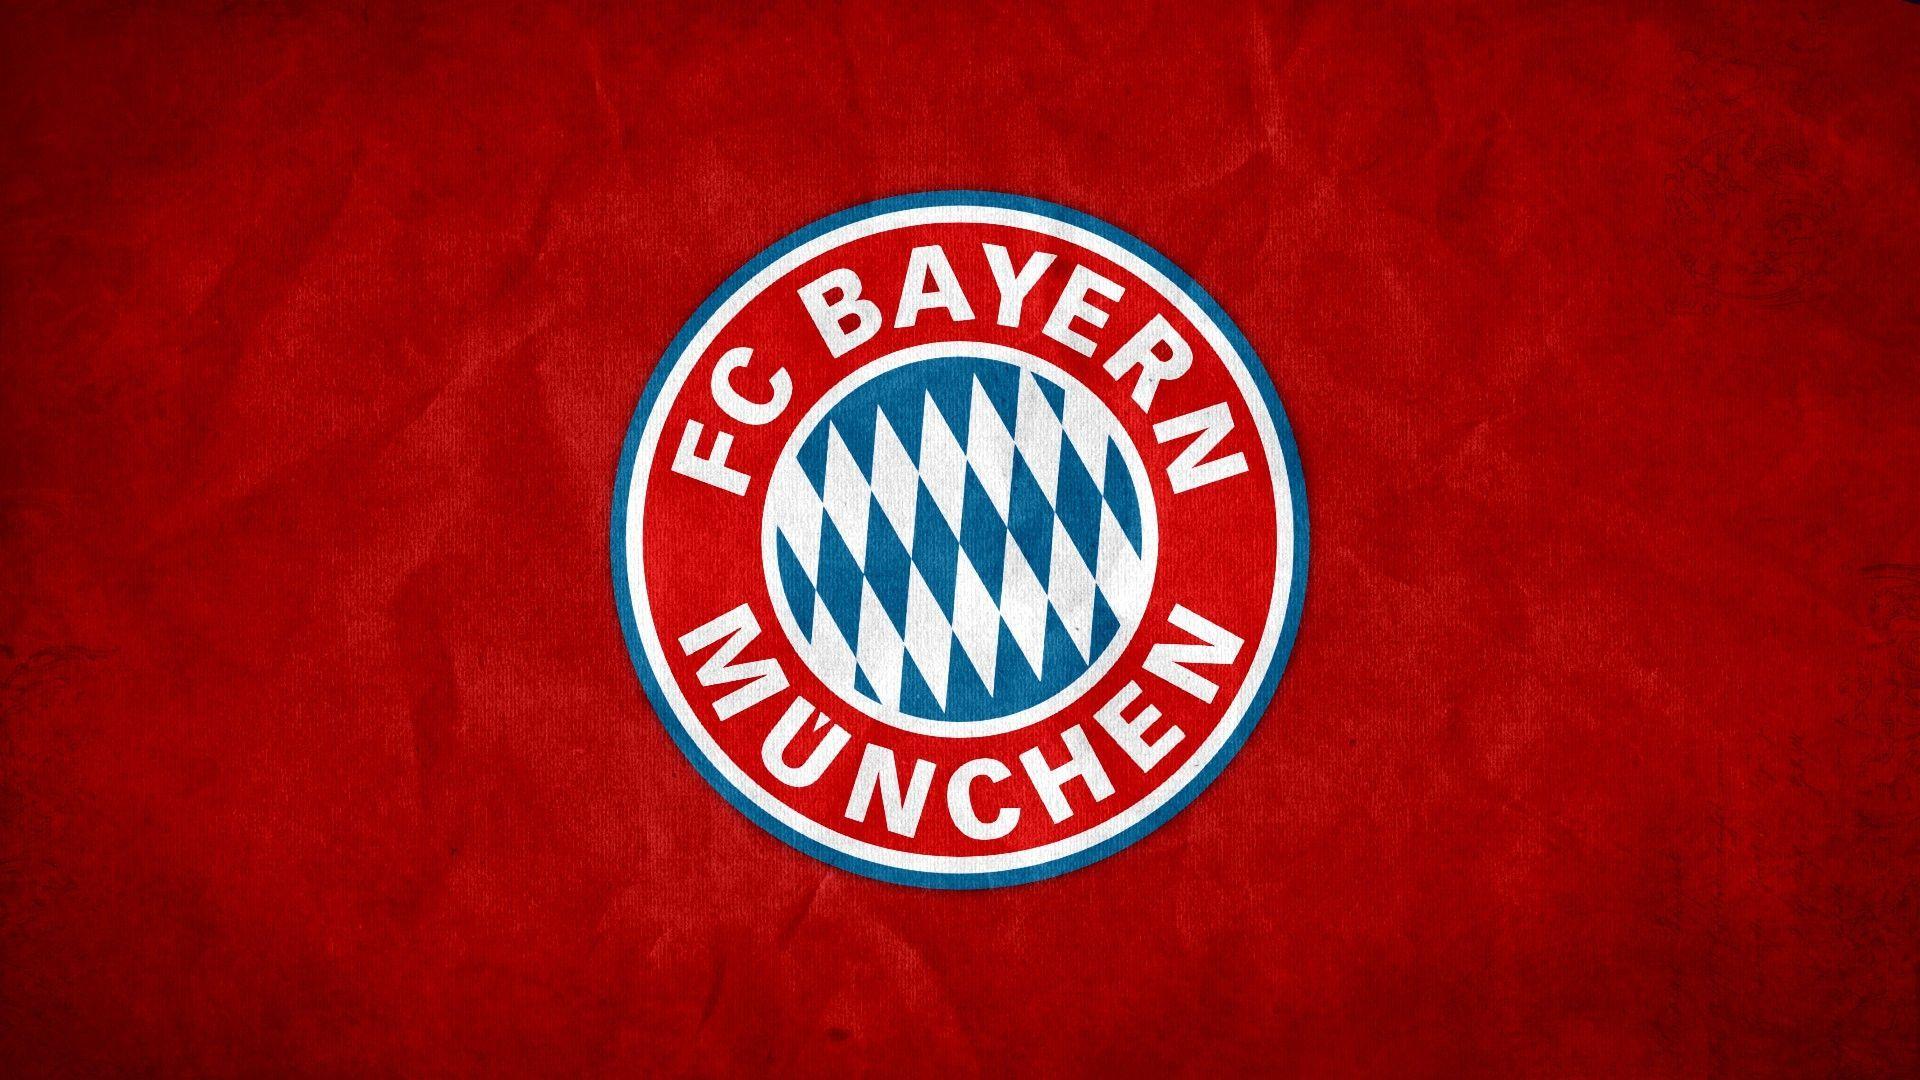 Bayern Munich Wallpaper and Windows 10 Theme. All for Windows 10 Free